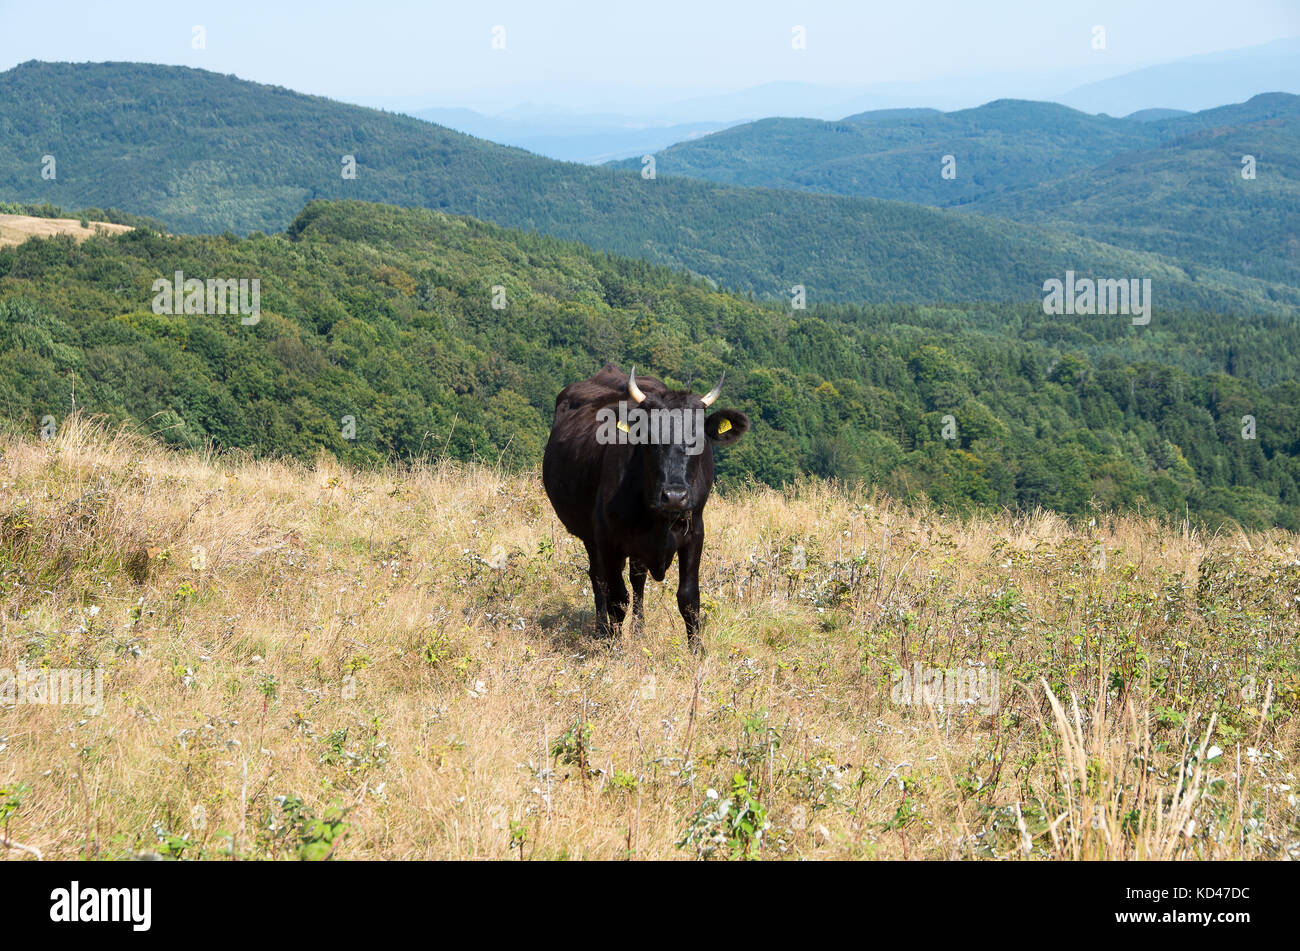 Livestock farming in the mountains. Stock Photo